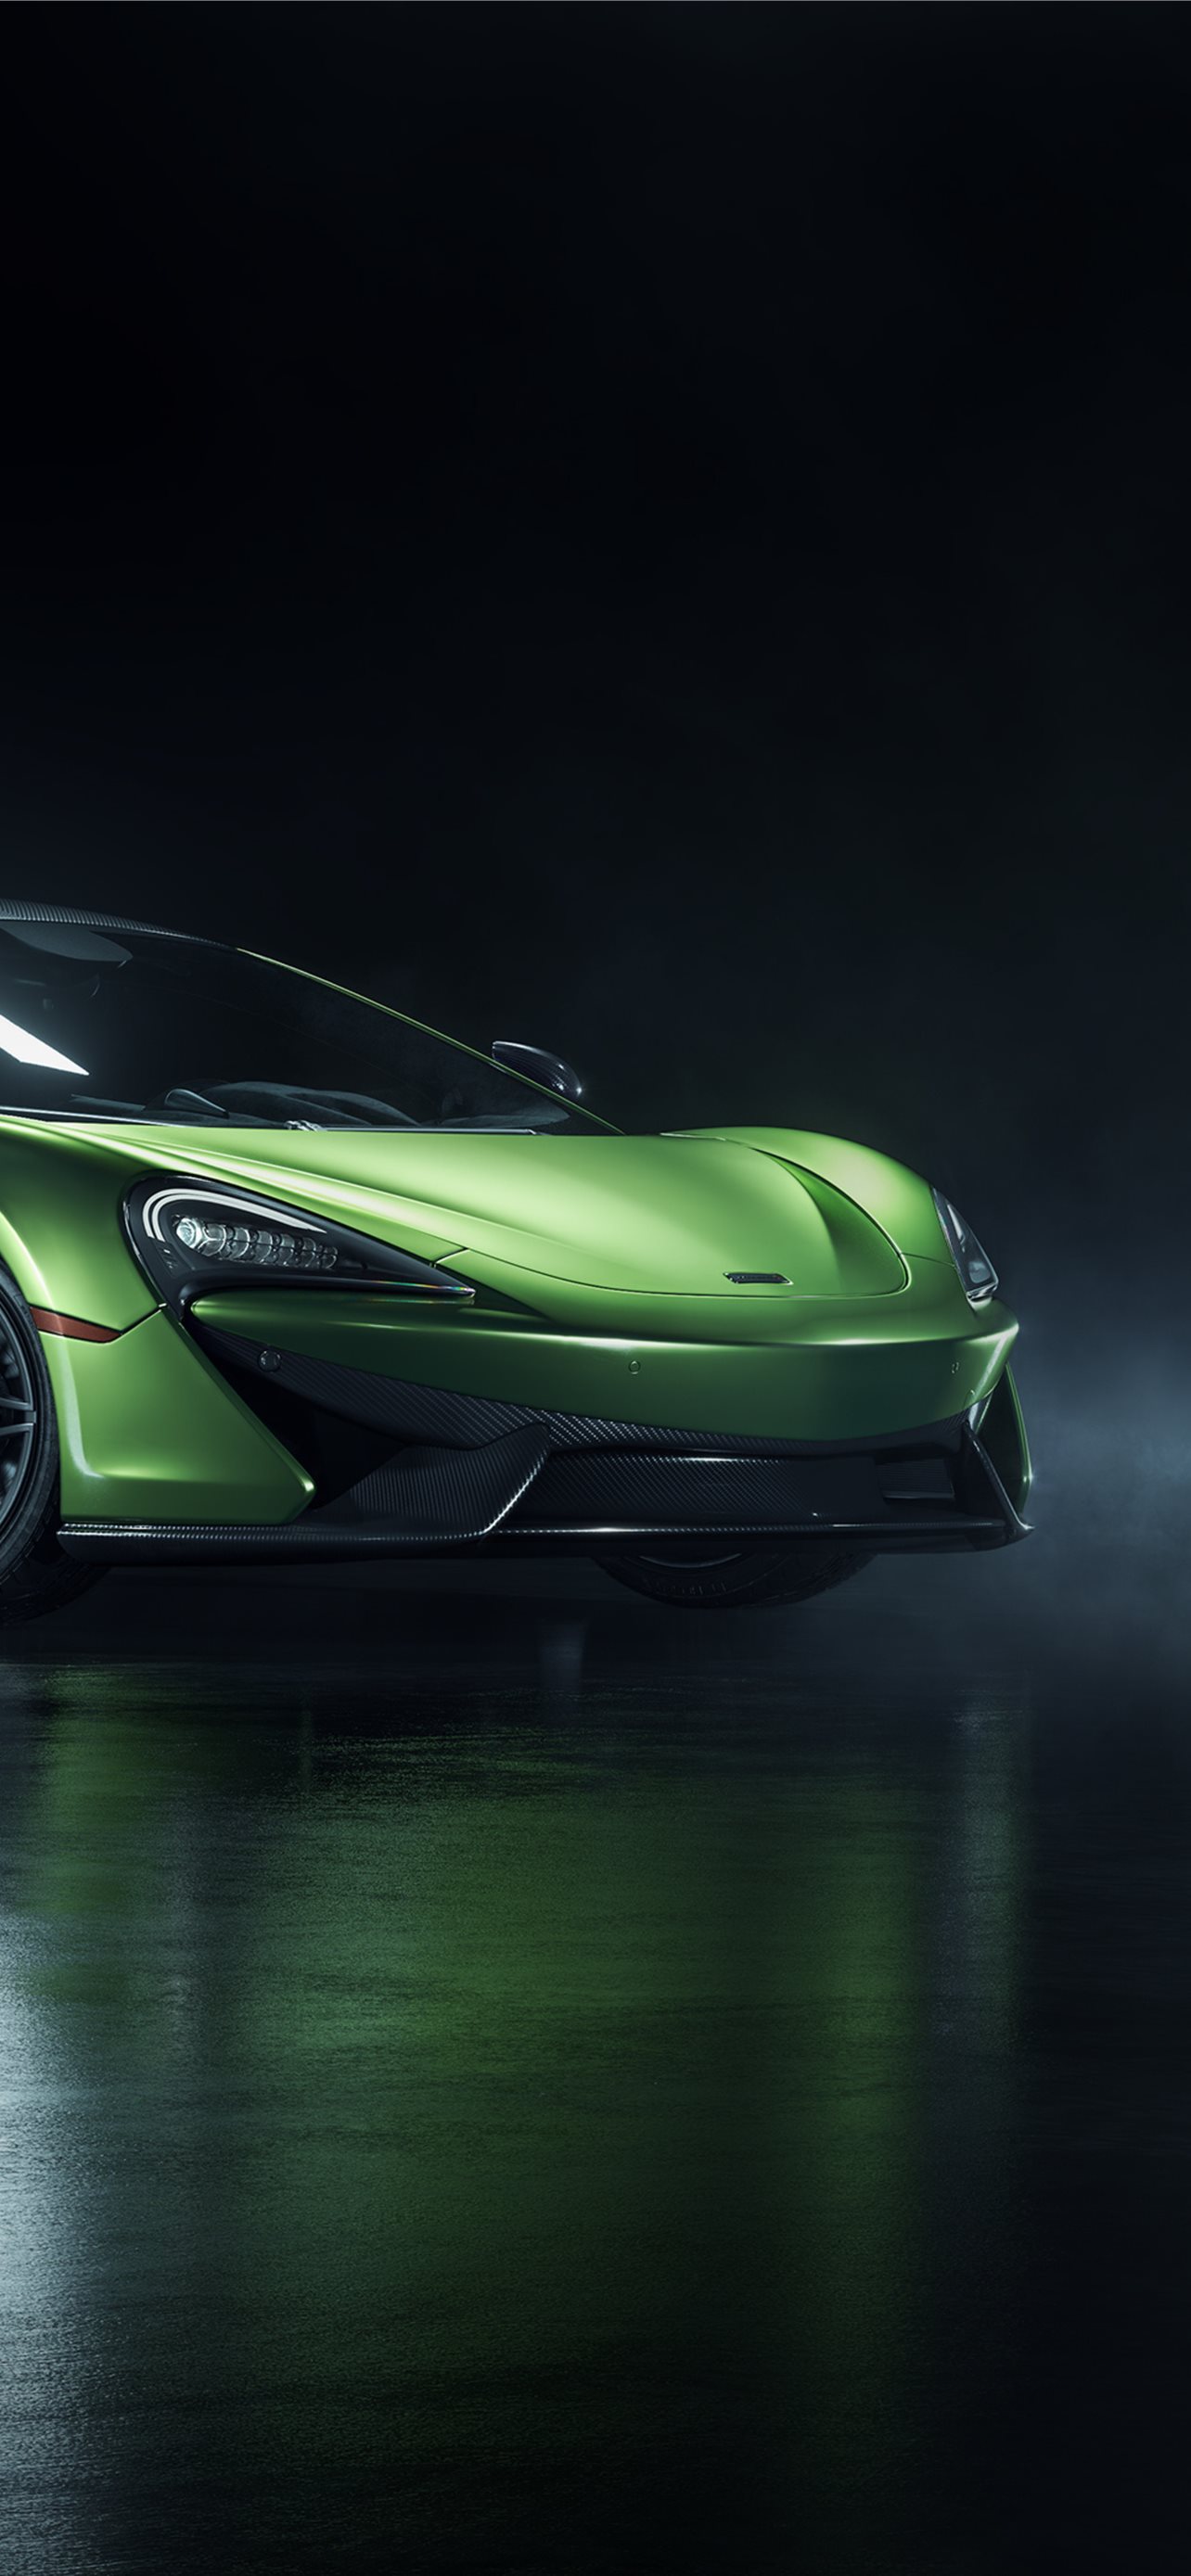 Green McLaren Artura Sport Supercar 4K HD Cars Wallpapers | HD Wallpapers |  ID #62646